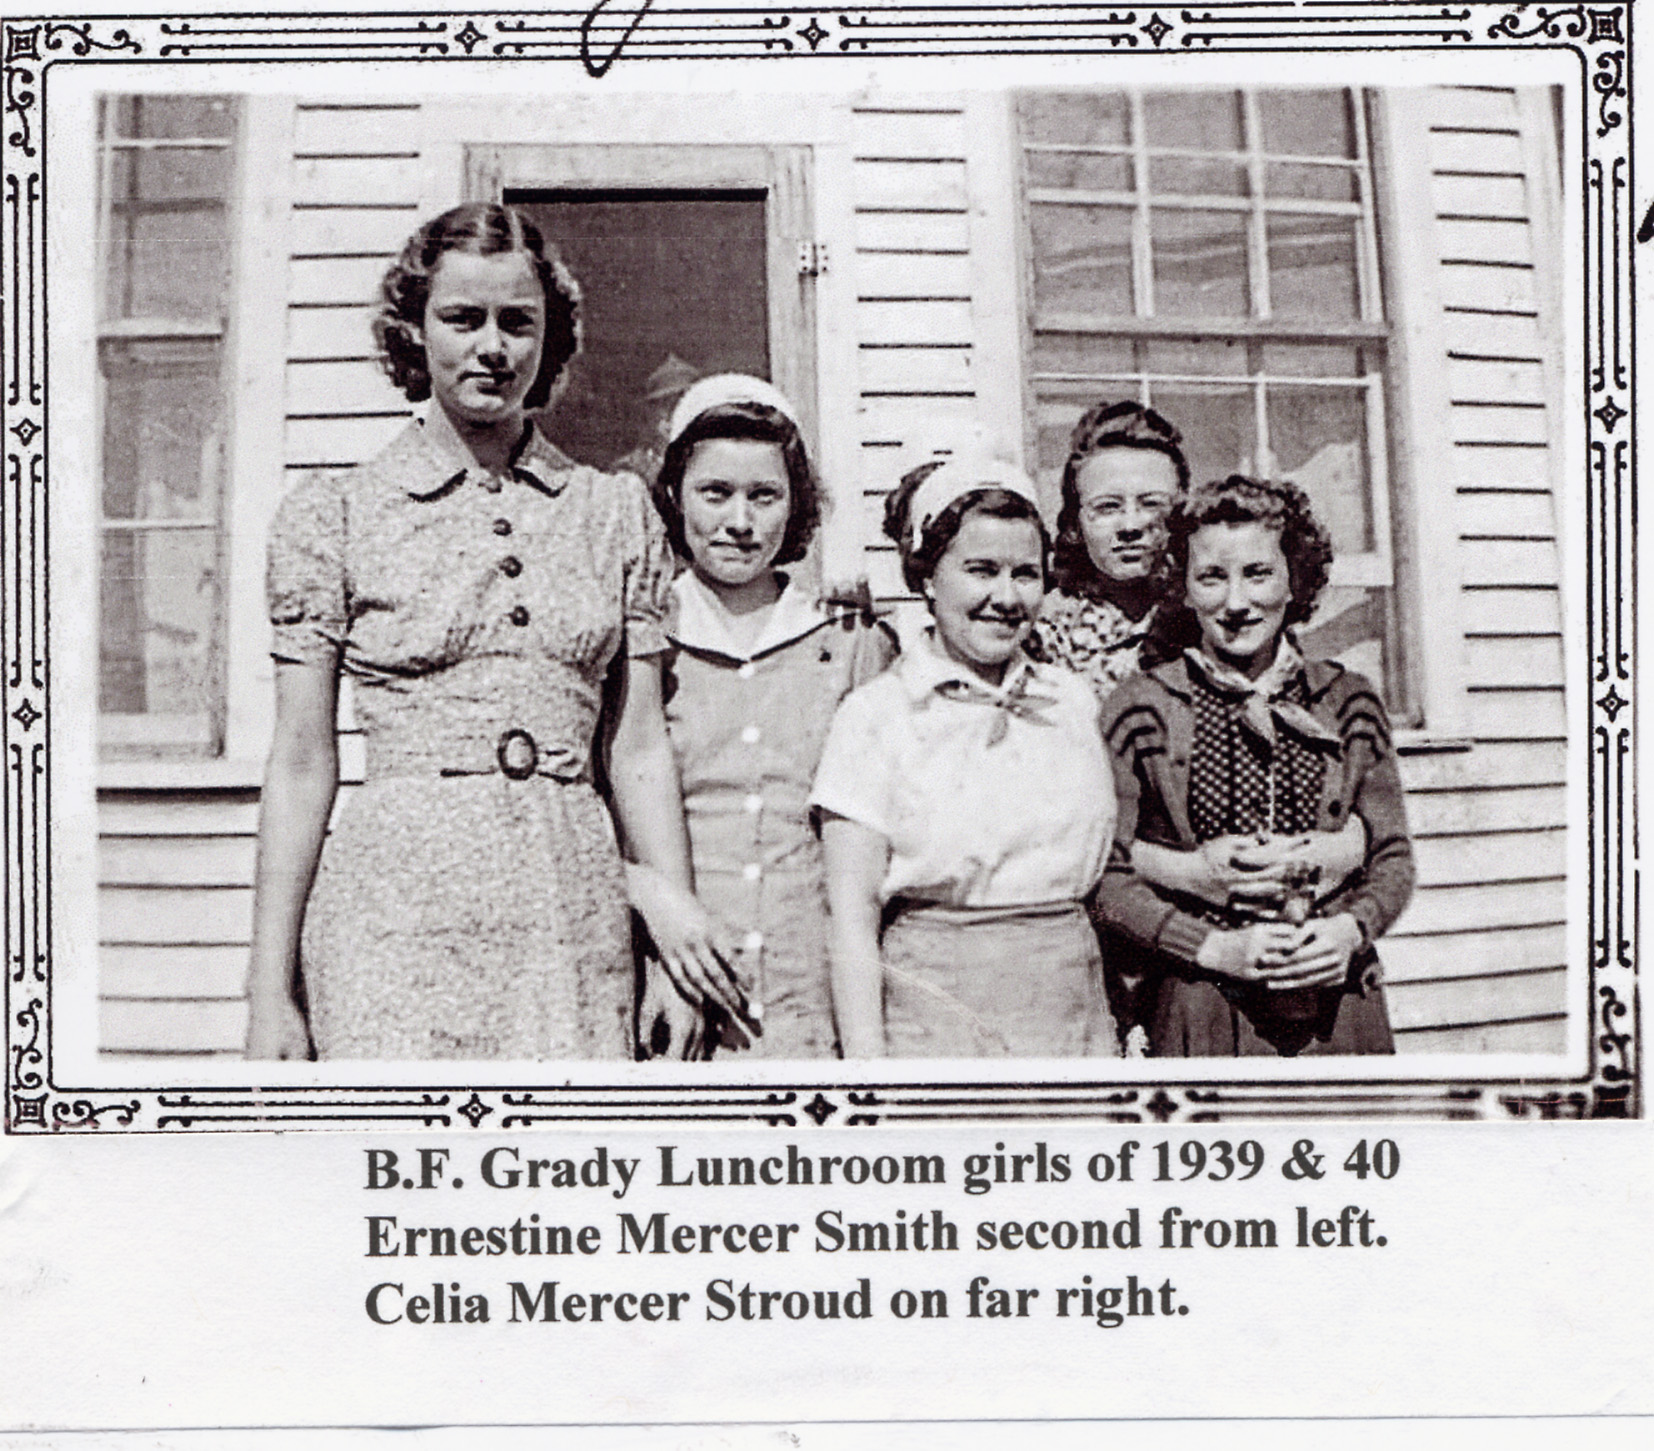 Lunchroome girls 1939 - 40